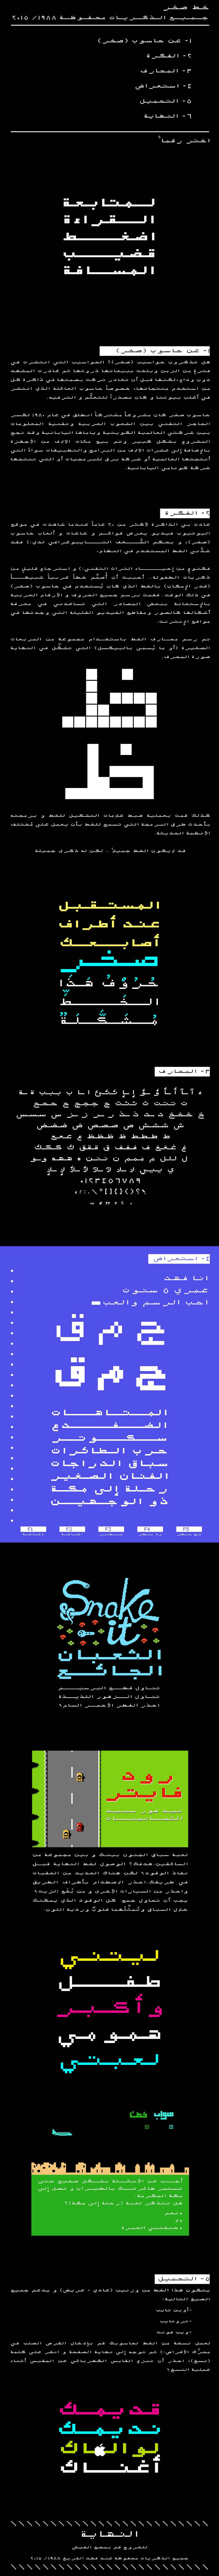 Sakhr Typeface